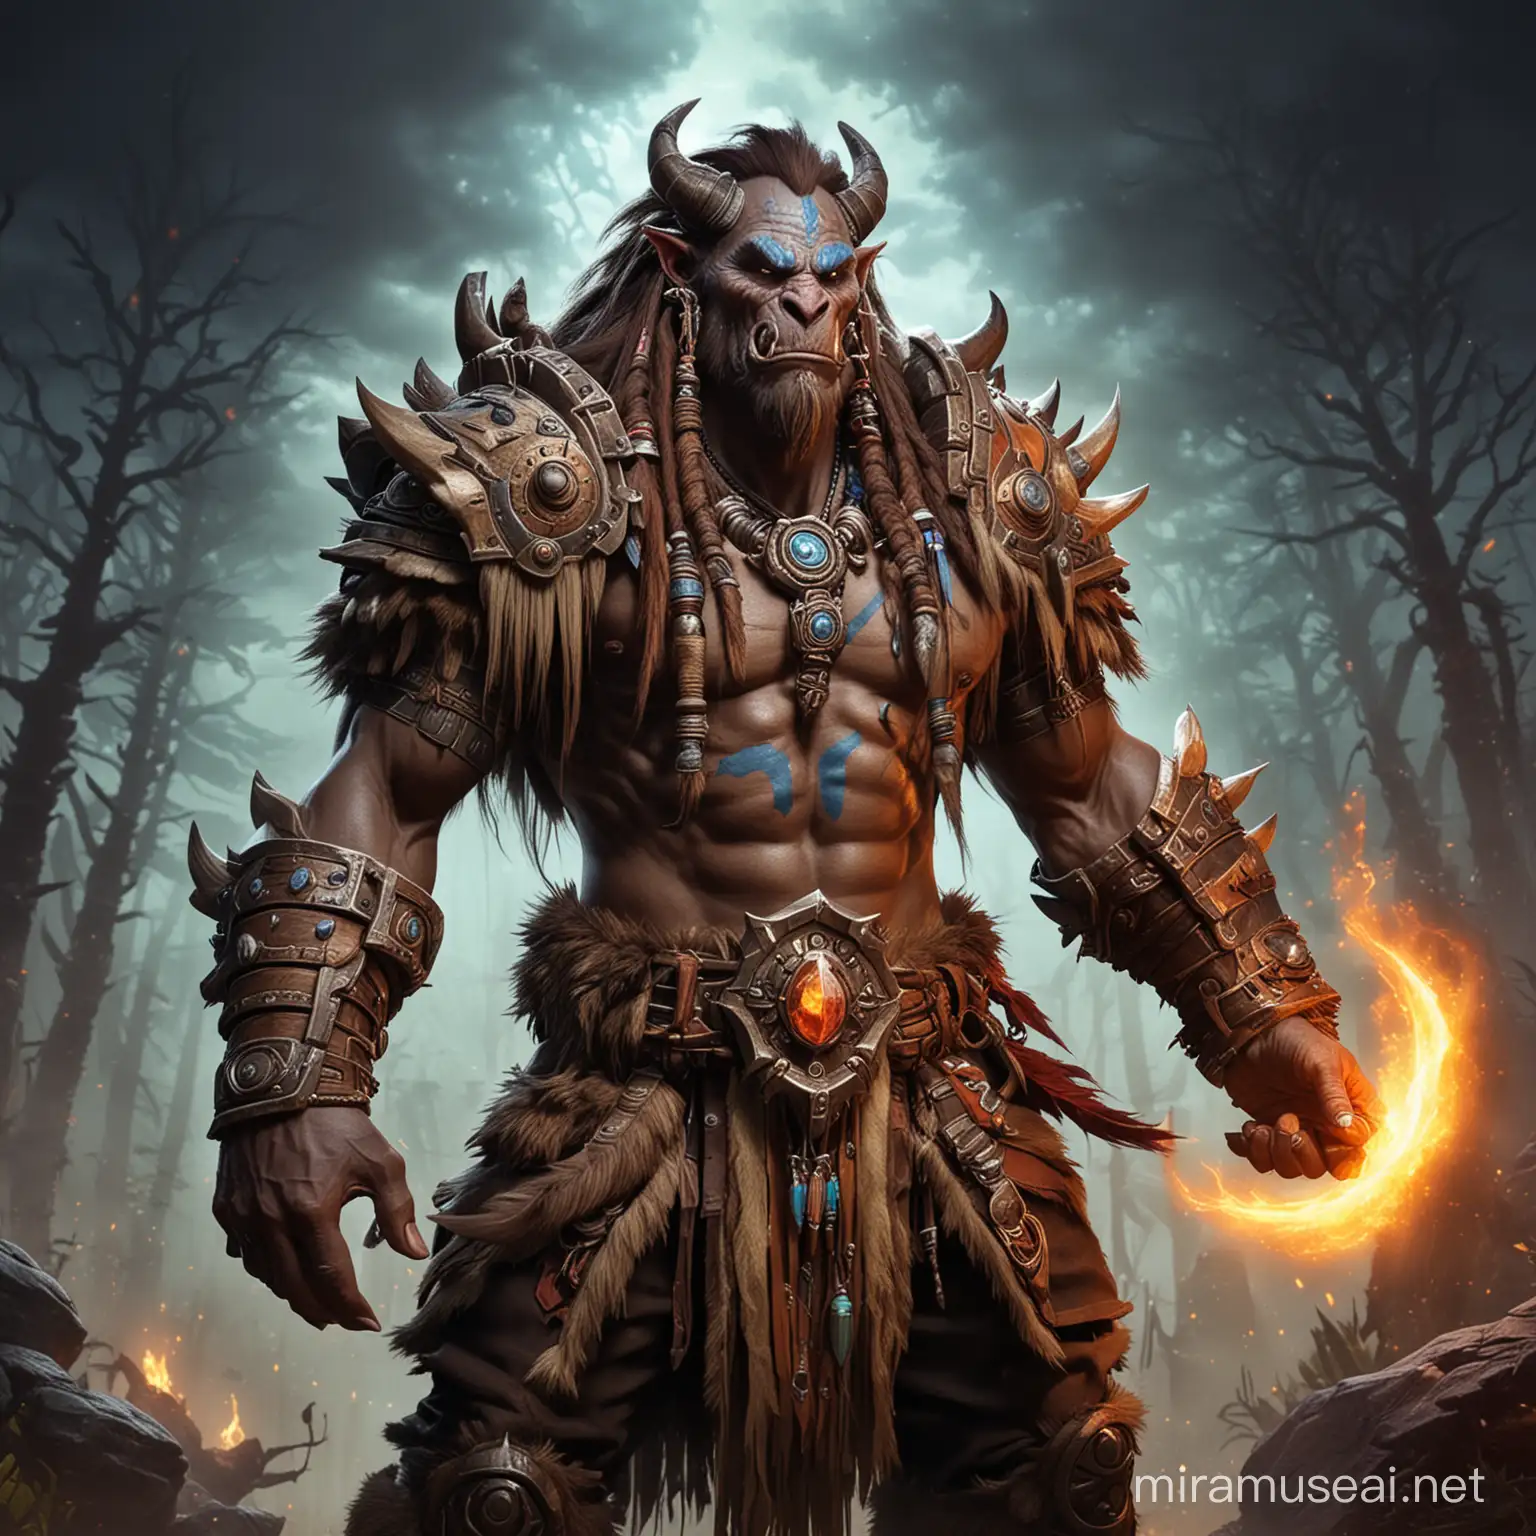 Maghar Shaman Casting Elemental Magic in World of Warcraft Fan Art